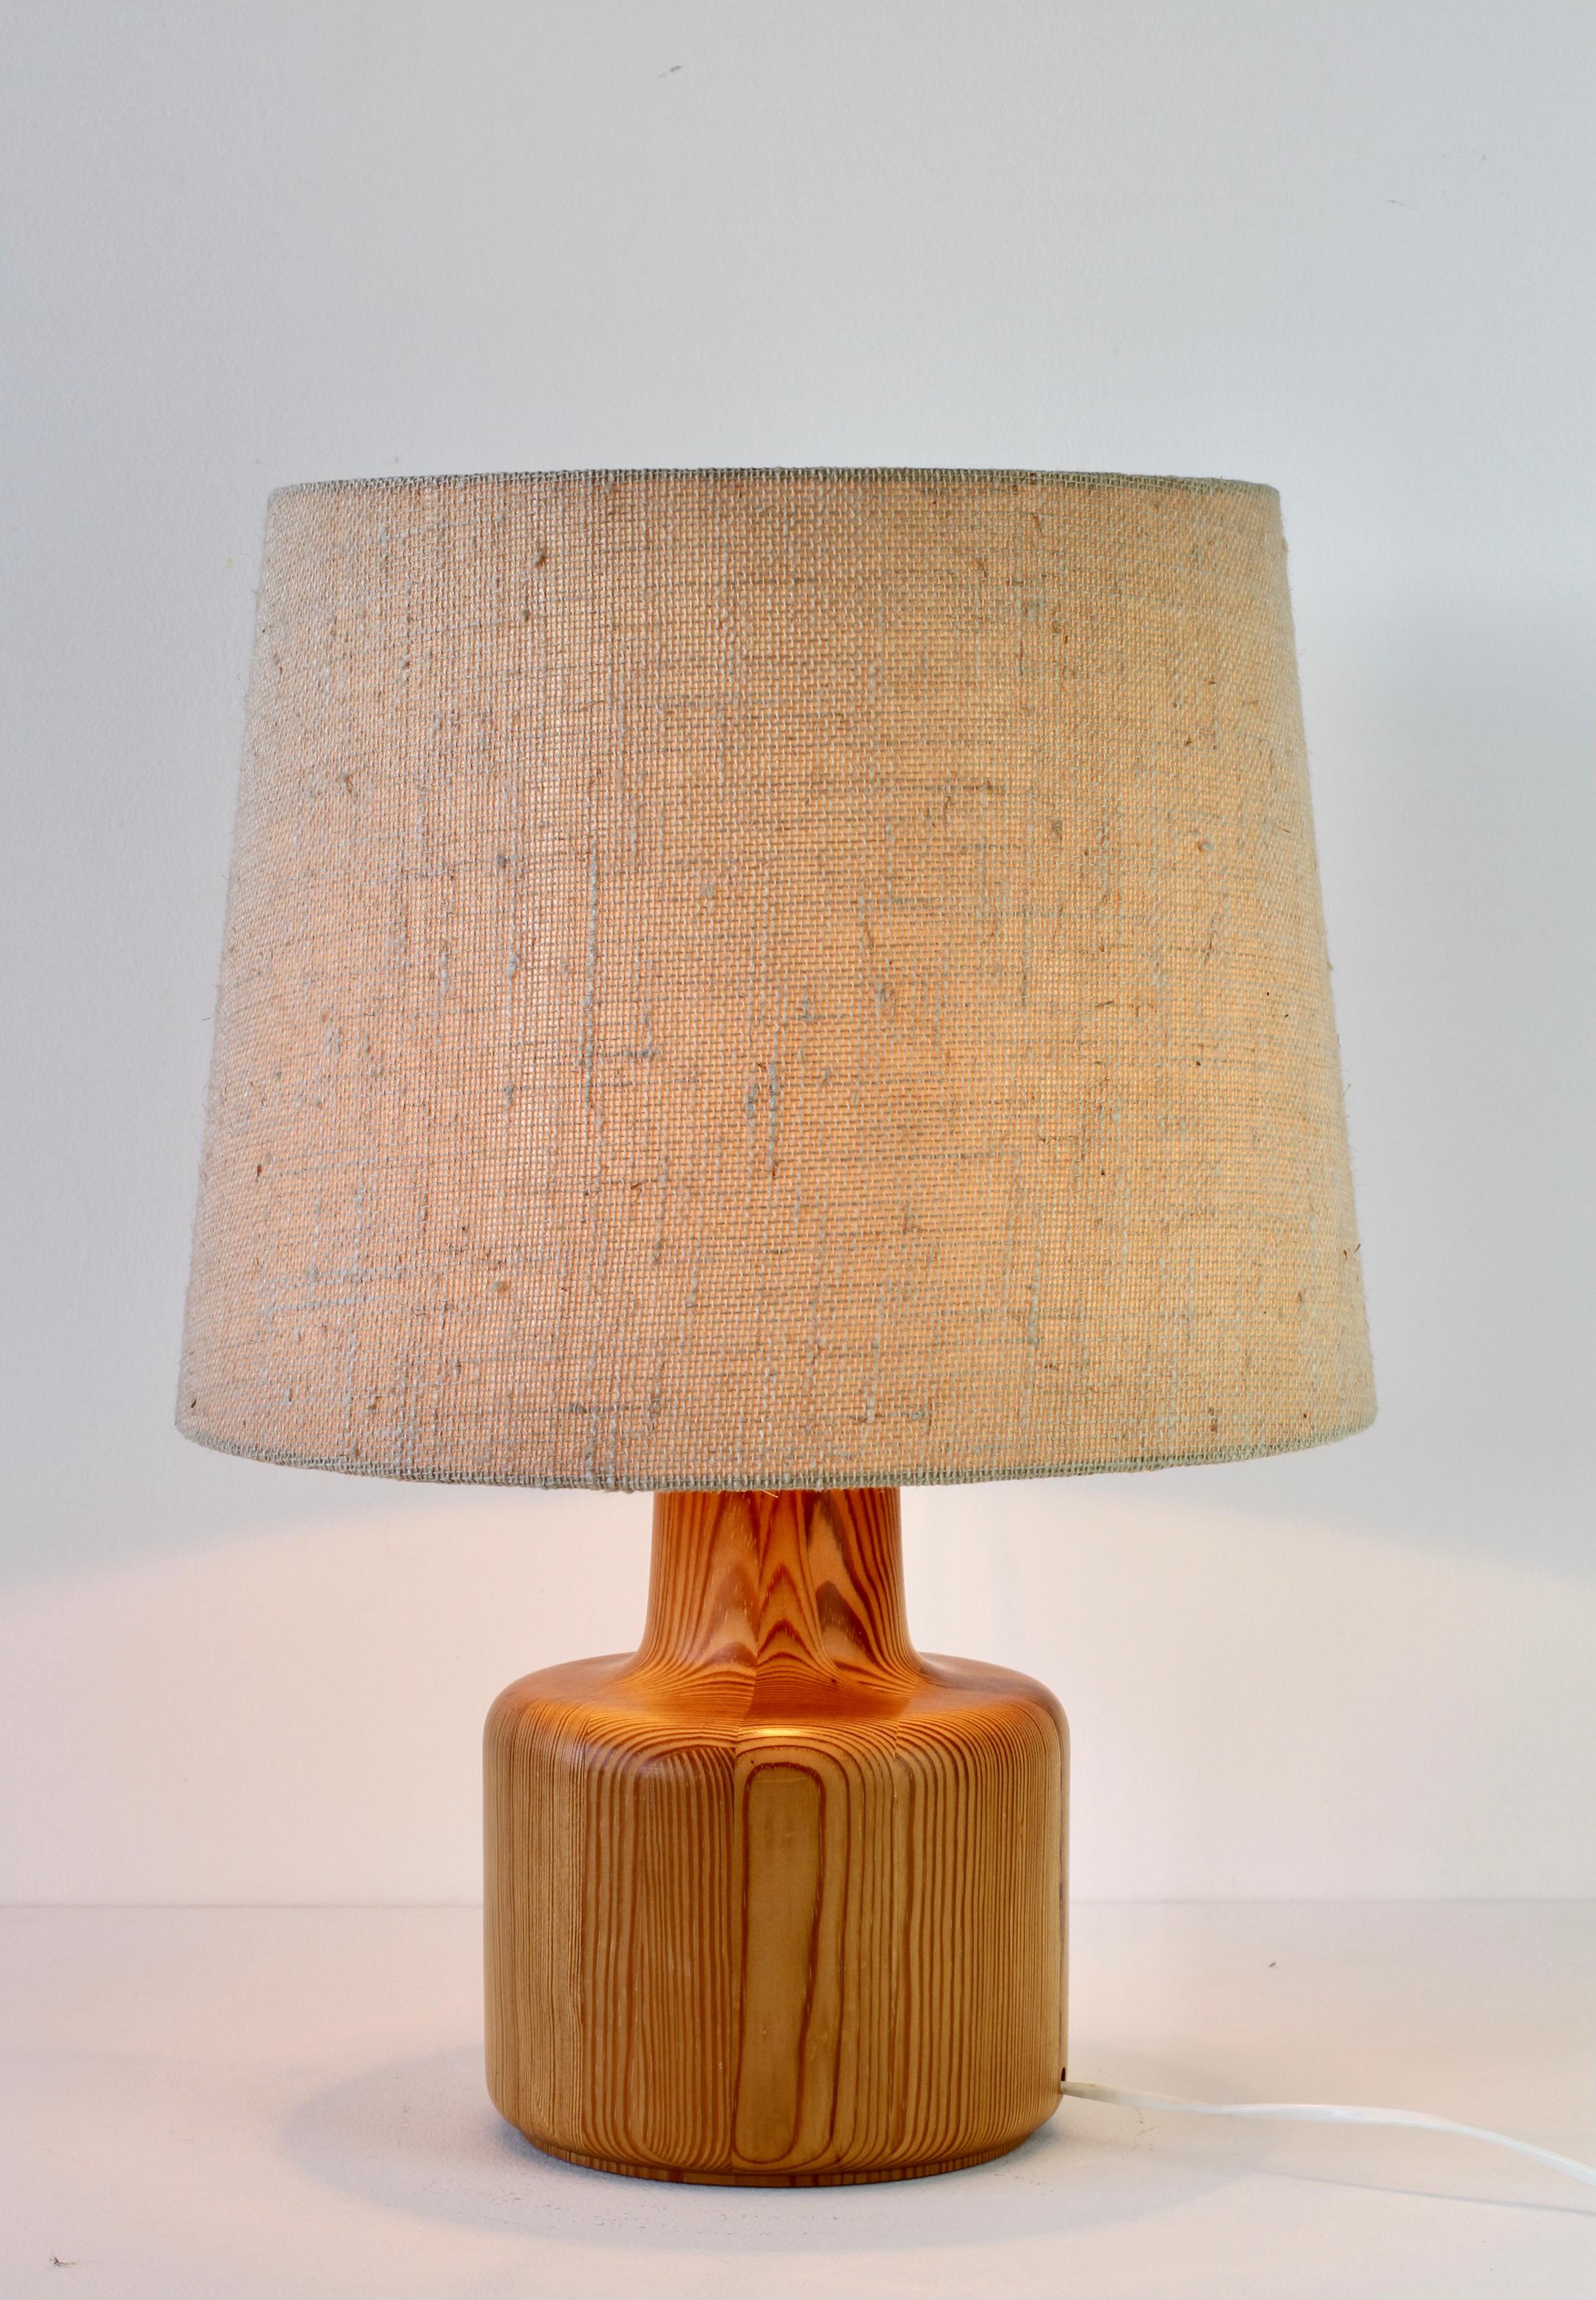 1970s Large Scandinavian Style Pine Wood Table Light Lamp Original Fabric Shade 9